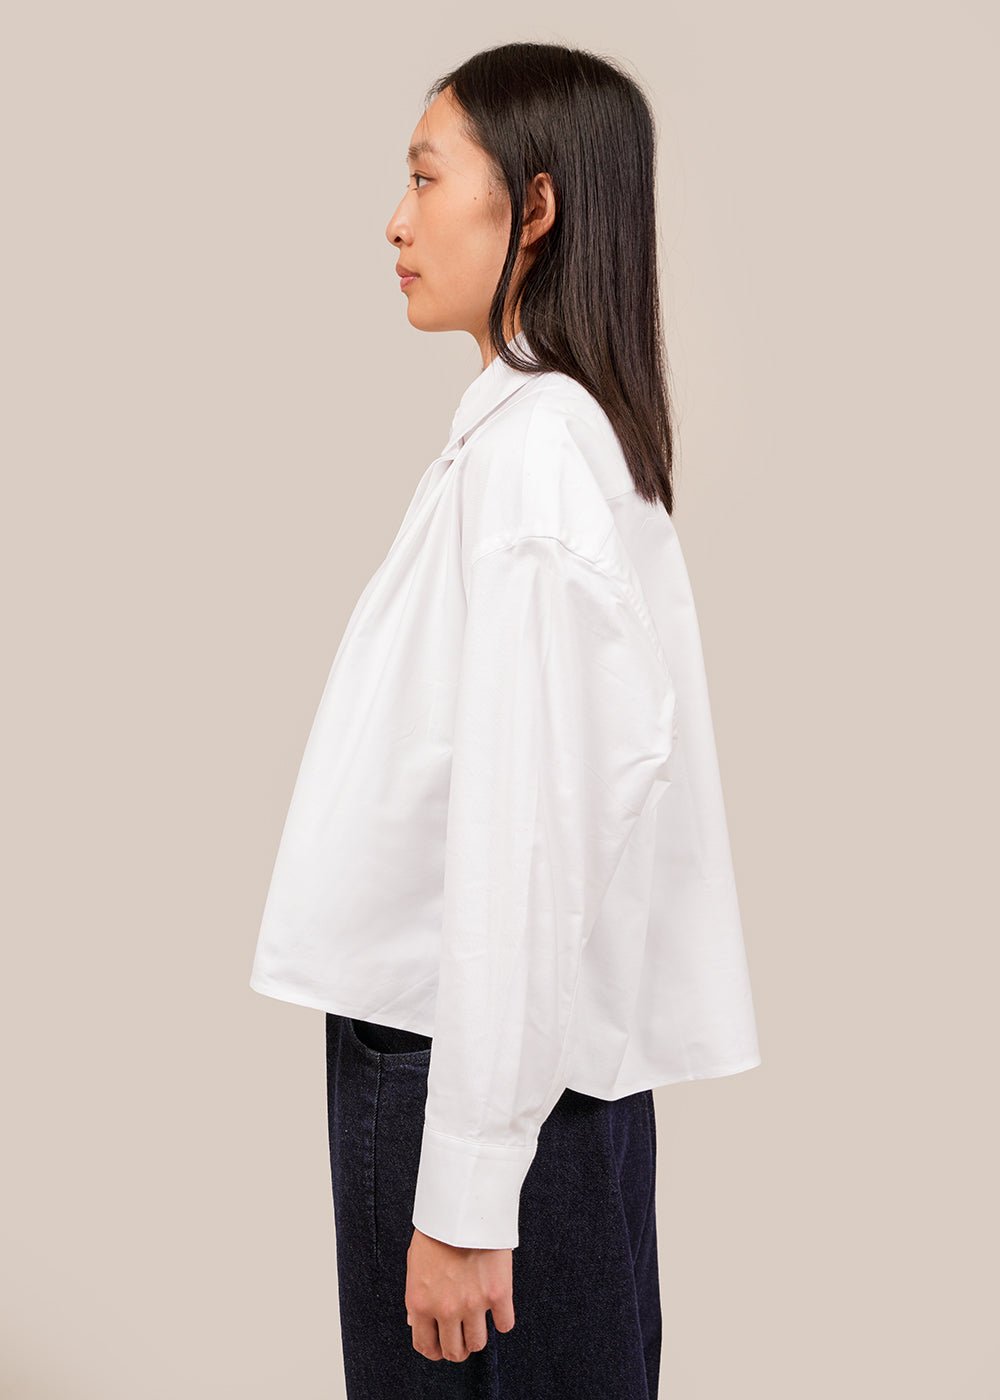 Cordera White Shirt - New Classics Studios Sustainable Ethical Fashion Canada